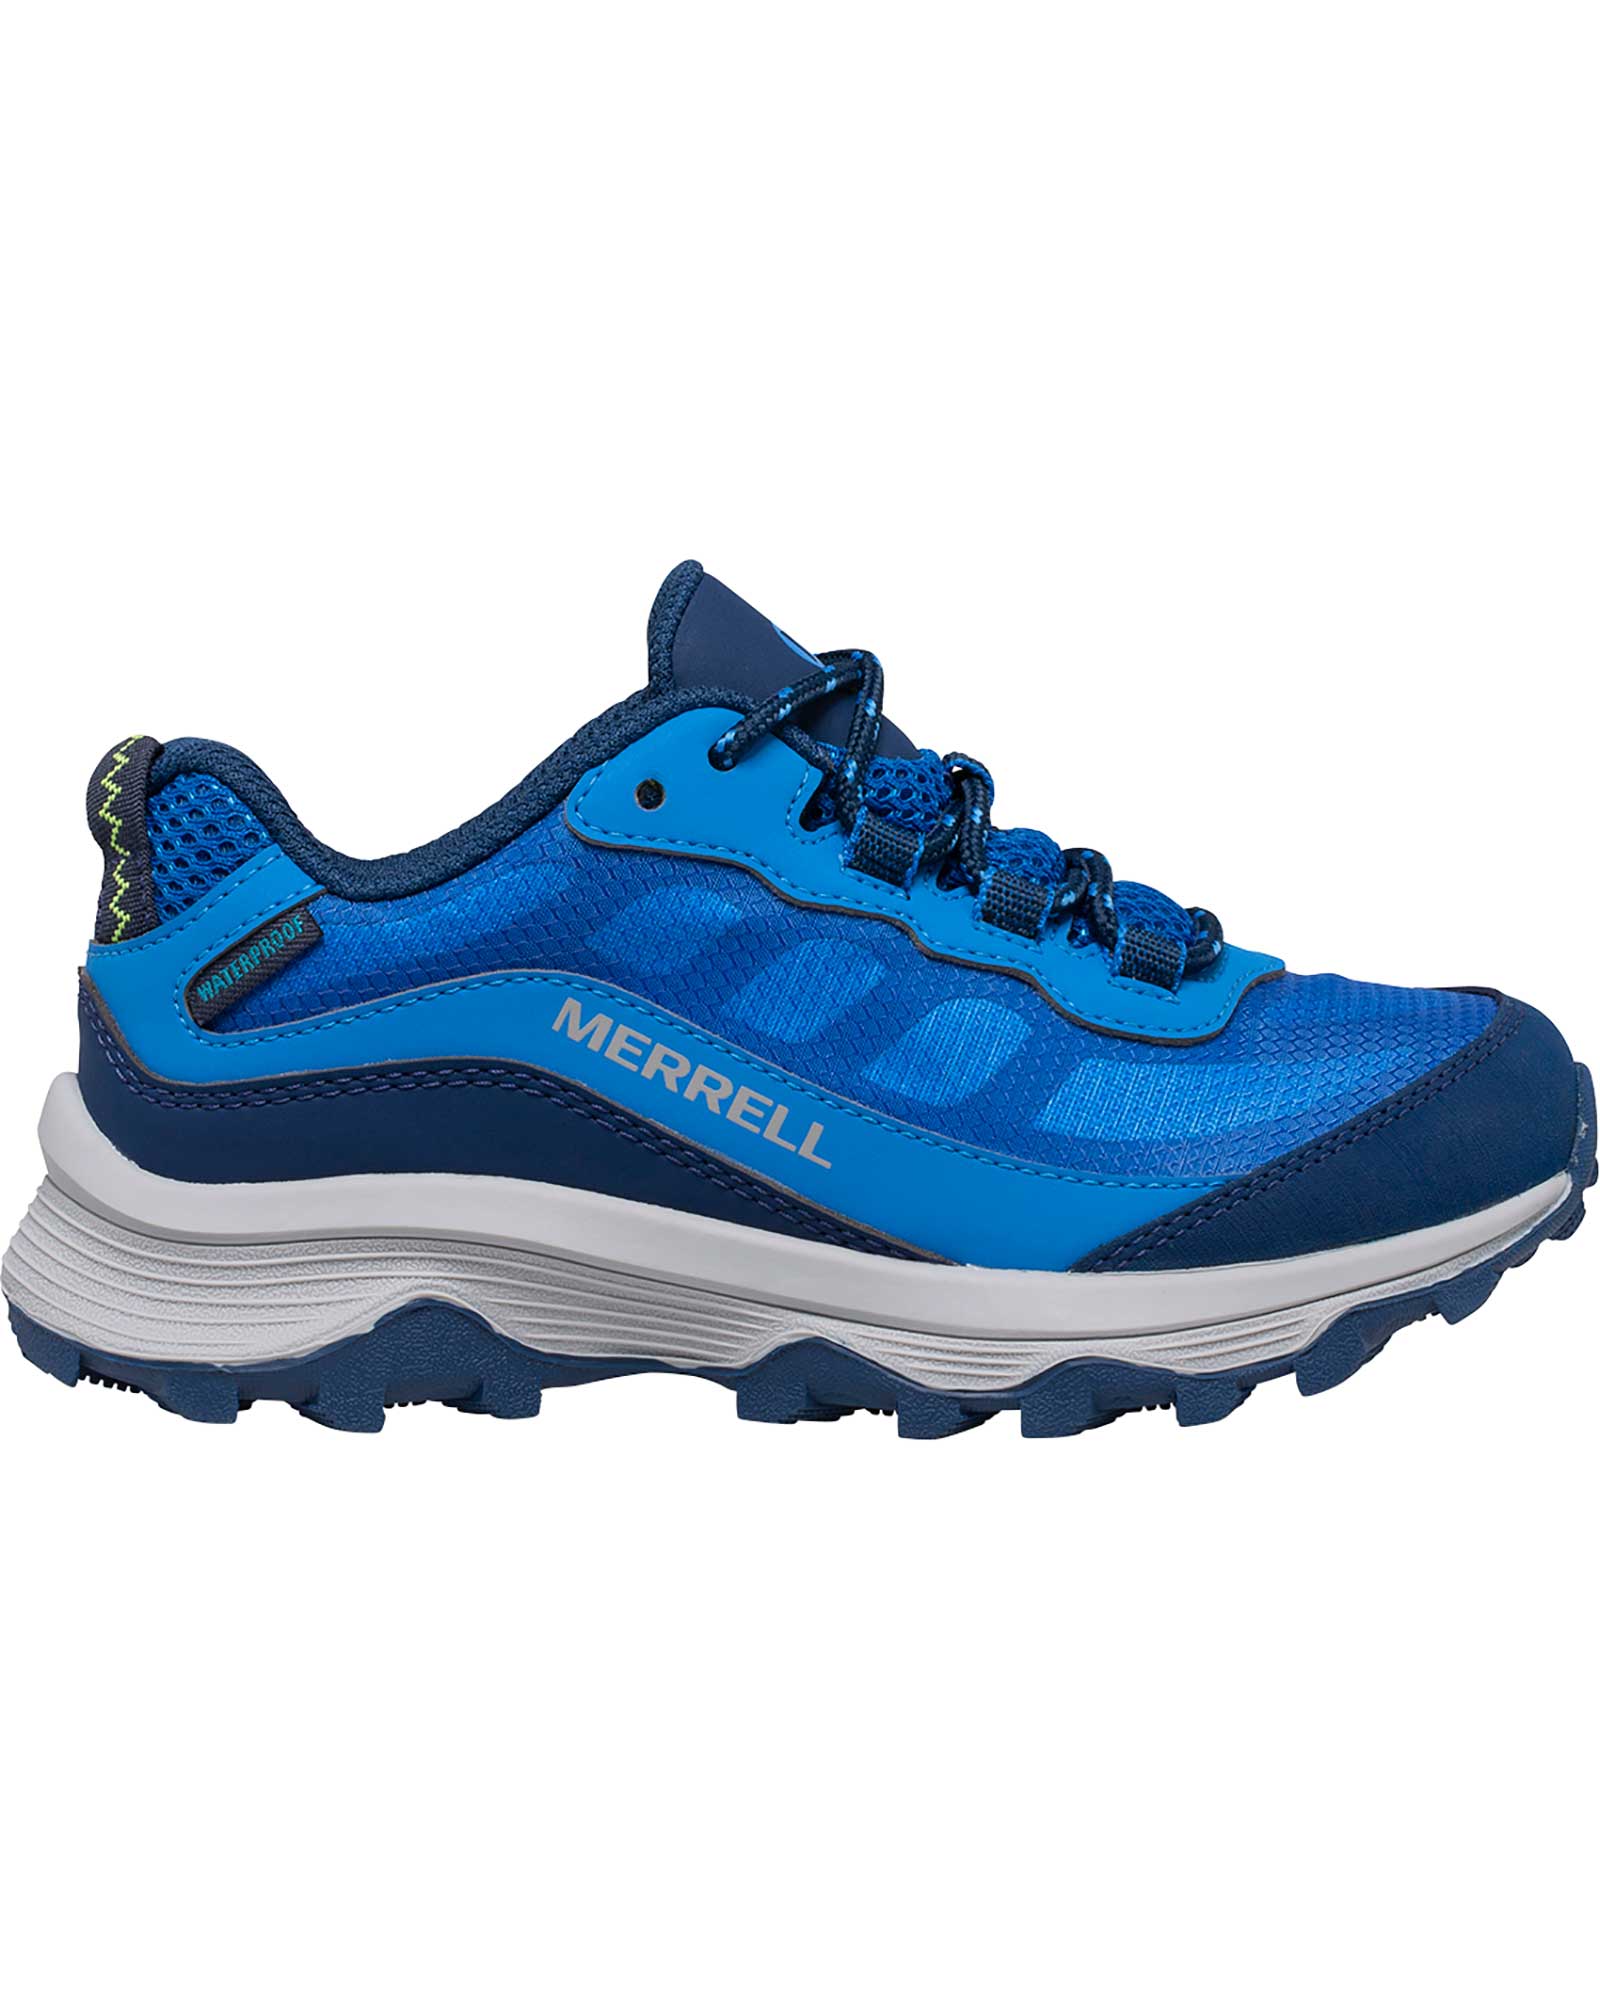 Merrell Moab Speed Laces Kids’ Waterproof Shoes - Blue UK 1